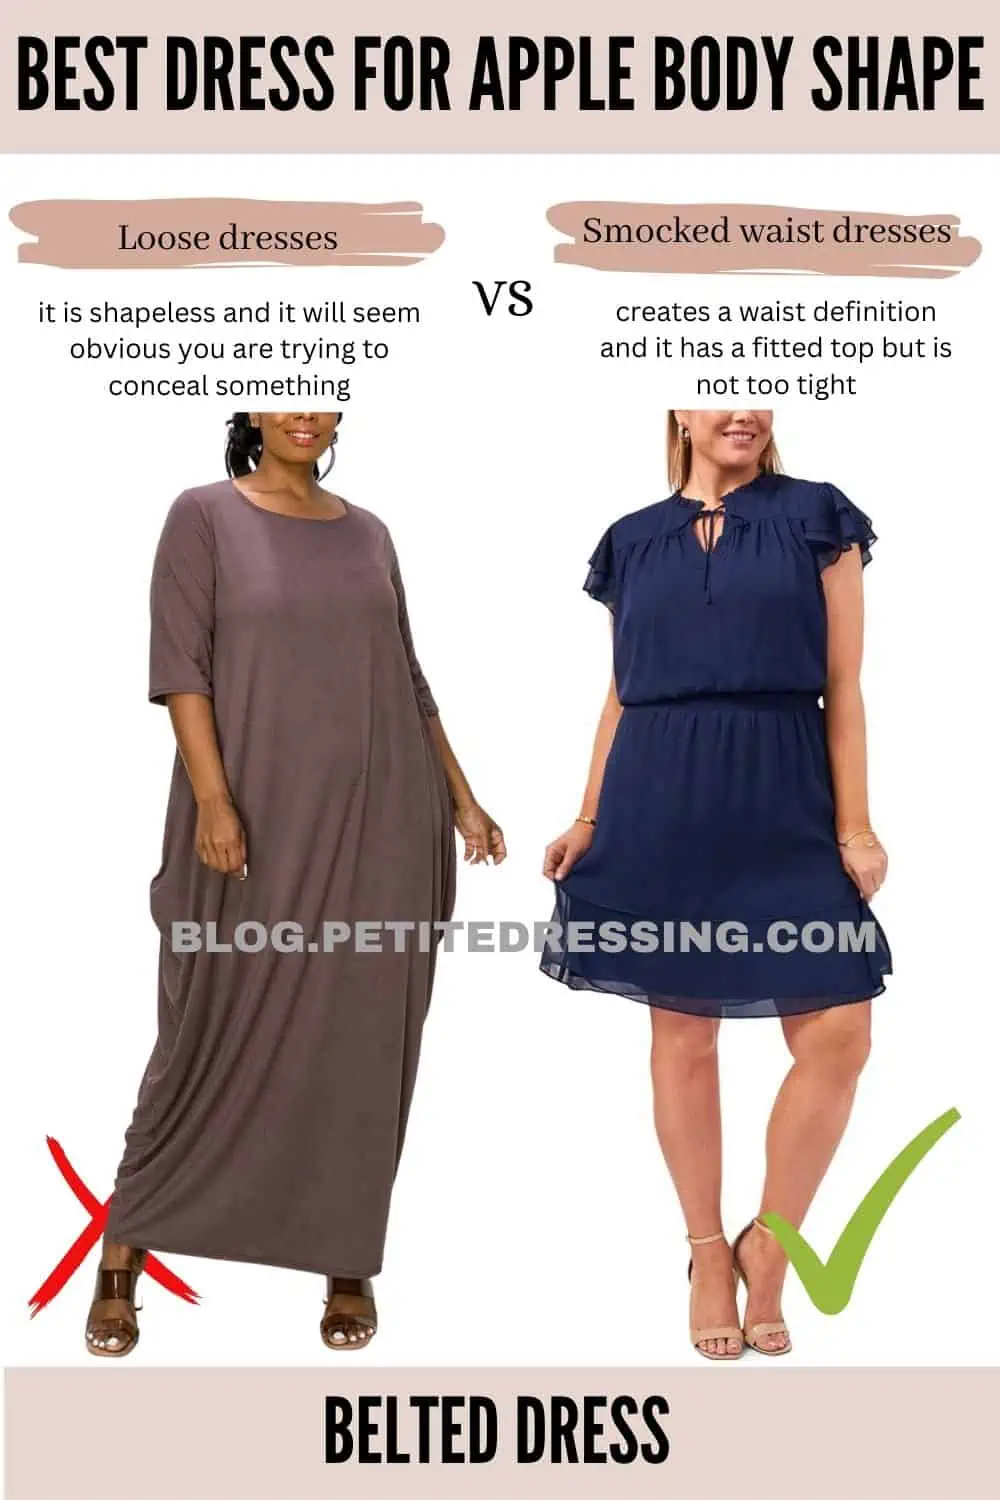 https://blog.petitedressing.com/wp-content/uploads/2020/02/Caution-with-loose-dresses.webp